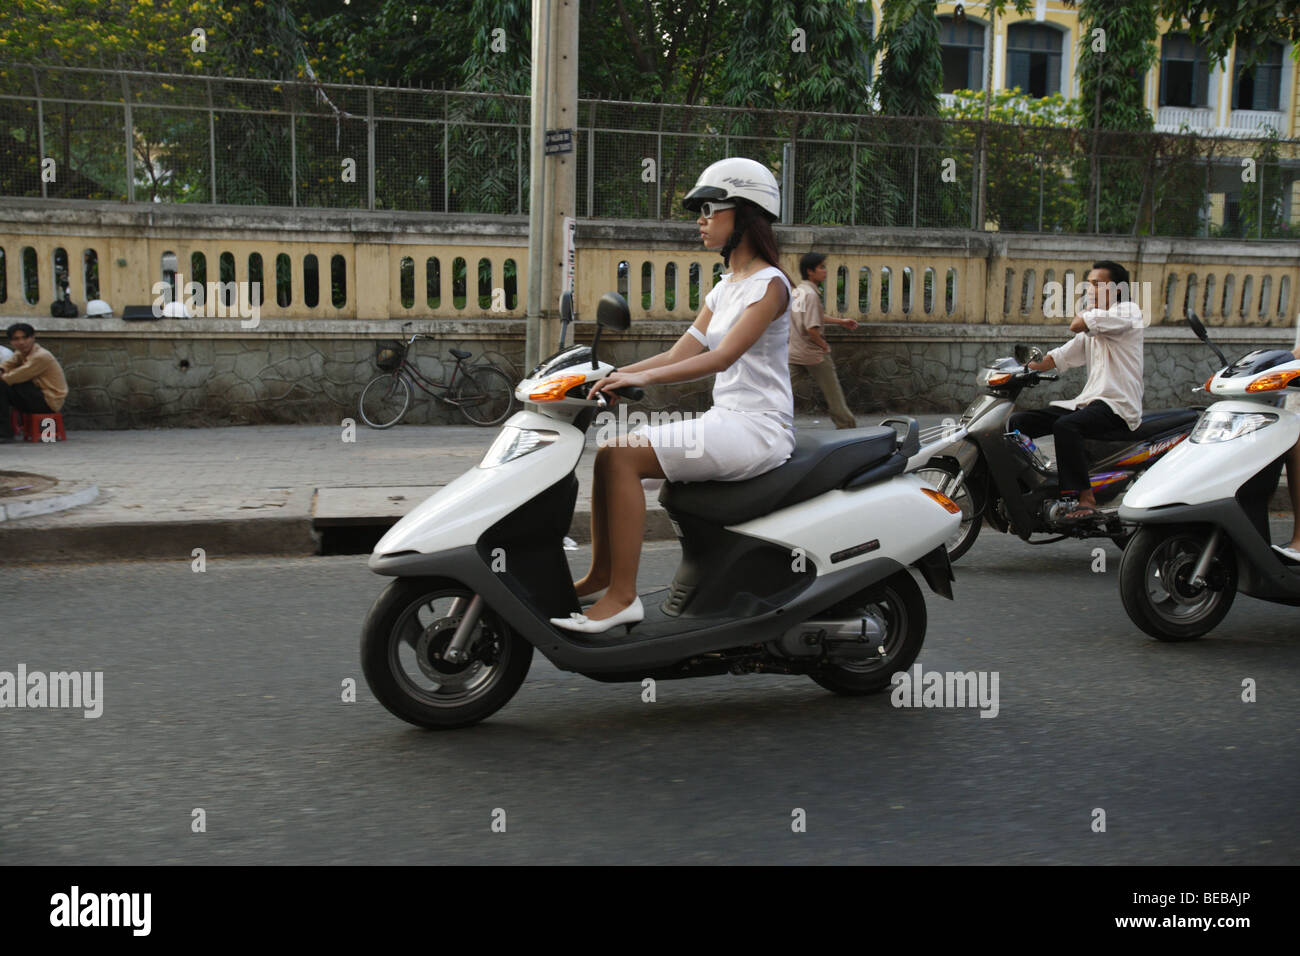 [Image: vietnam-saigon-fashionable-girl-on-a-new...BEBAJP.jpg]